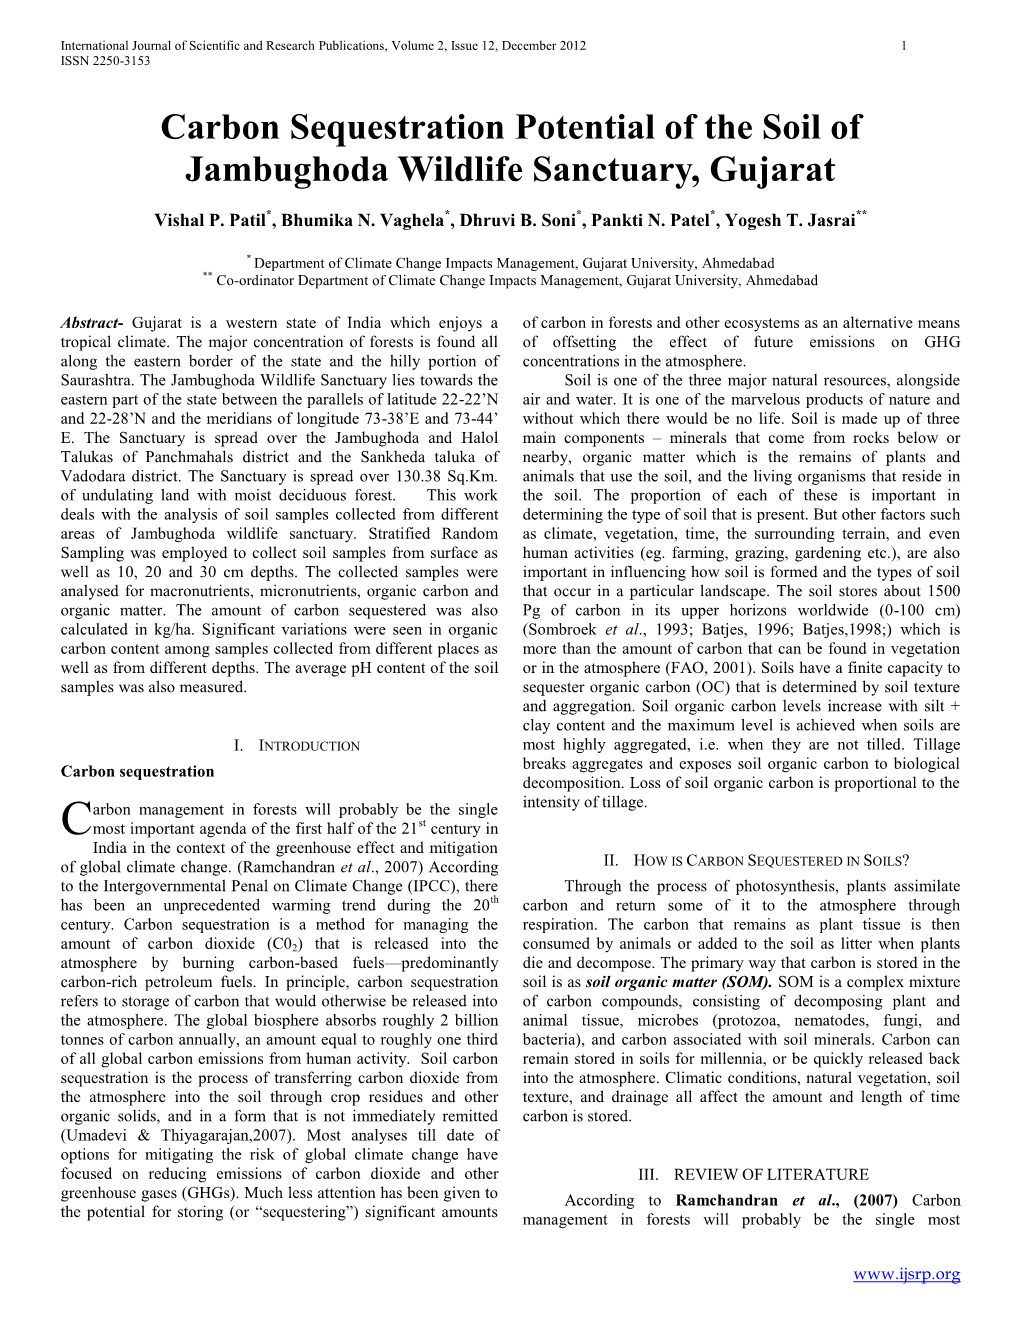 Carbon Seqestration Potential of the Soil of Jambughoda Wildlife Sanctuary, Gujarat